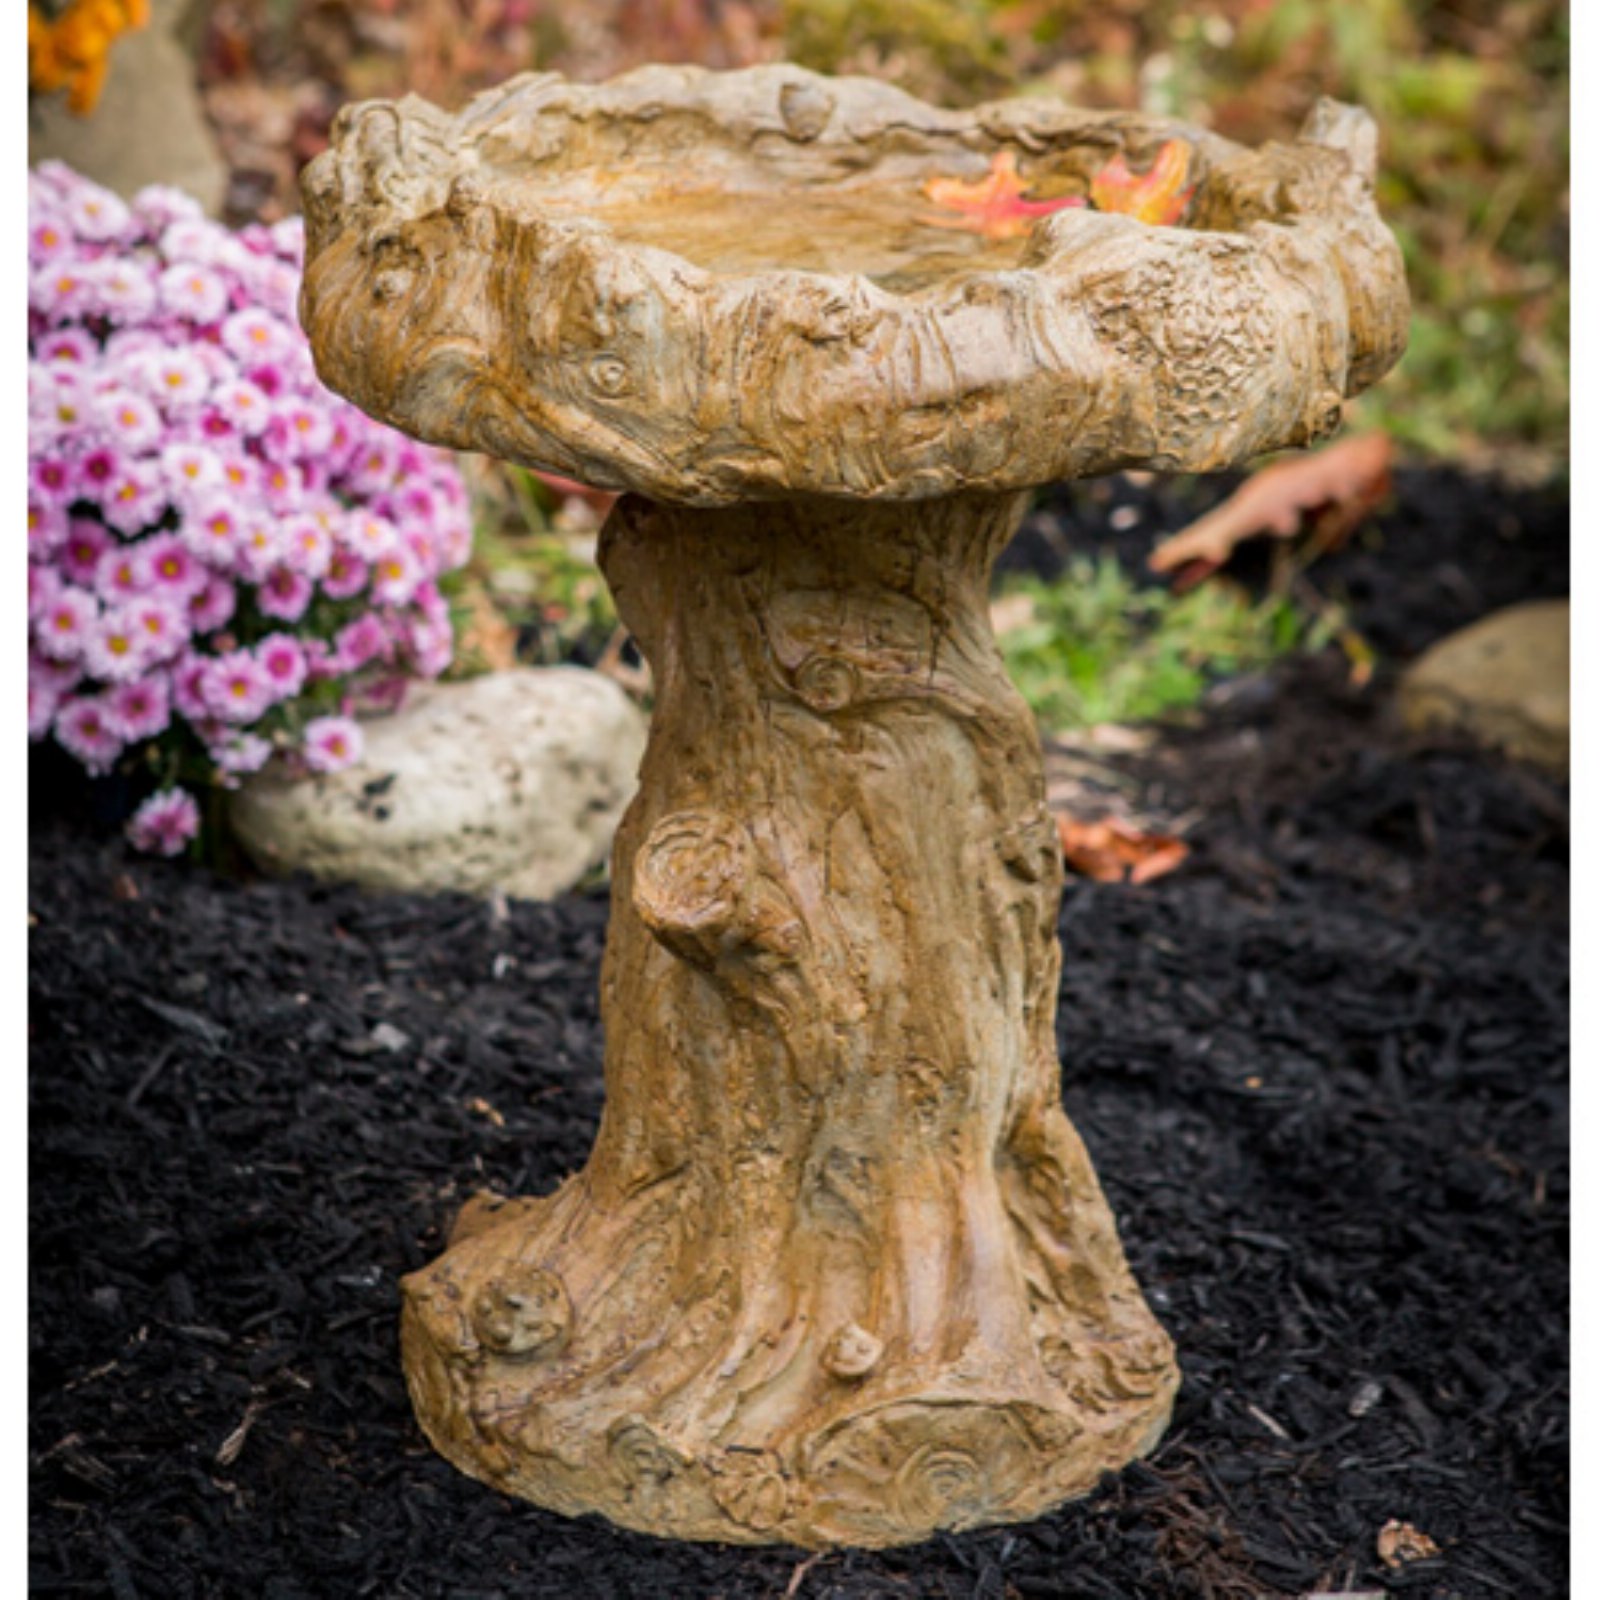 Athena Garden Cast Stone Log Bird Bath - image 1 of 3